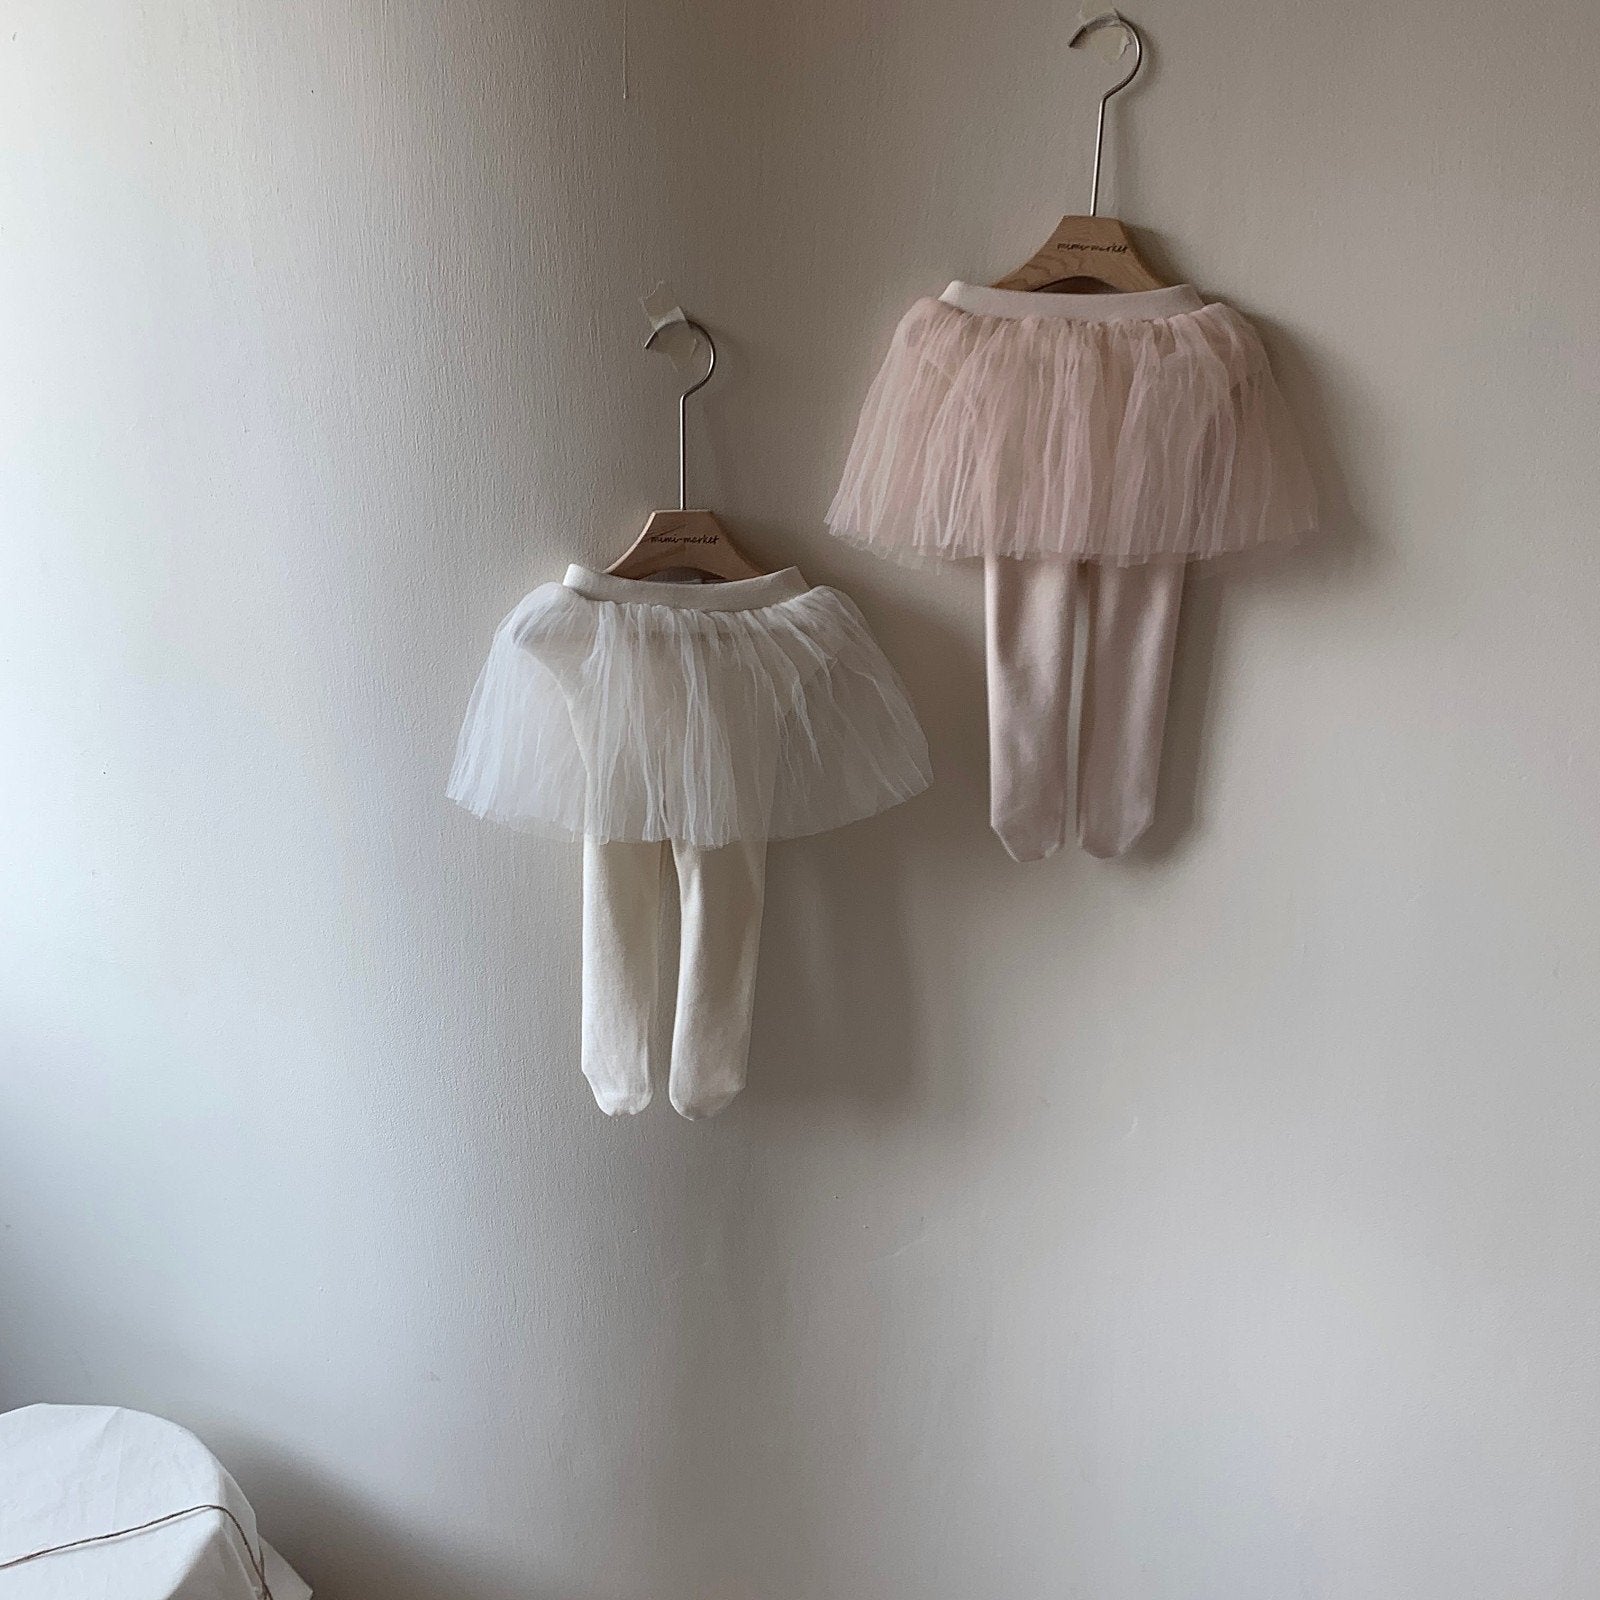 Mini Tutu Leggings find Stylish Fashion for Little People- at Little Foxx Concept Store